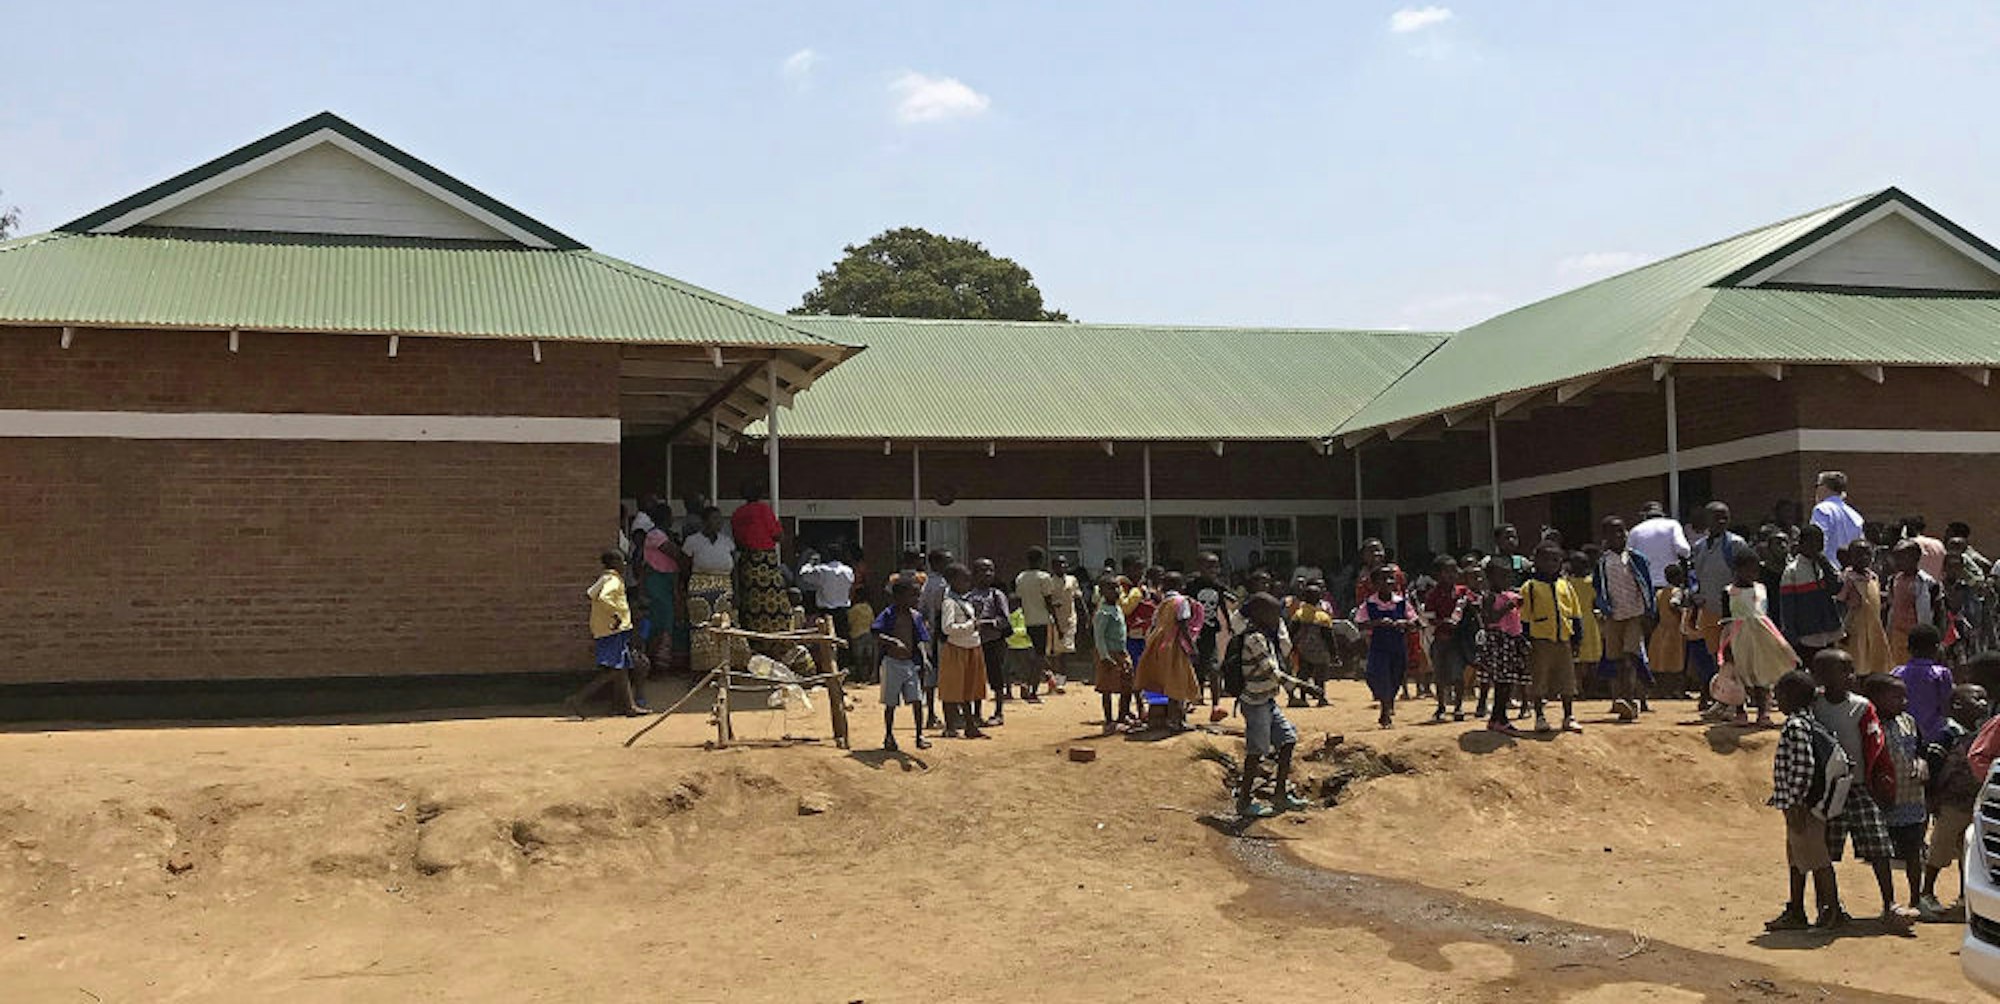 Die neue ABC-Bietmann-School in Malawi